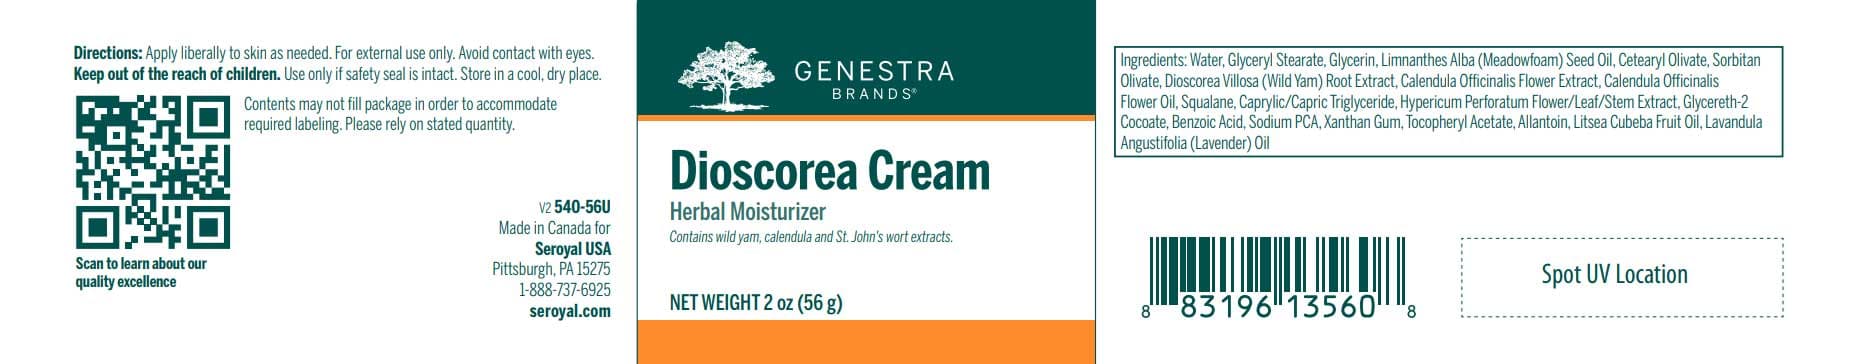 Genestra Brands Dioscorea Label